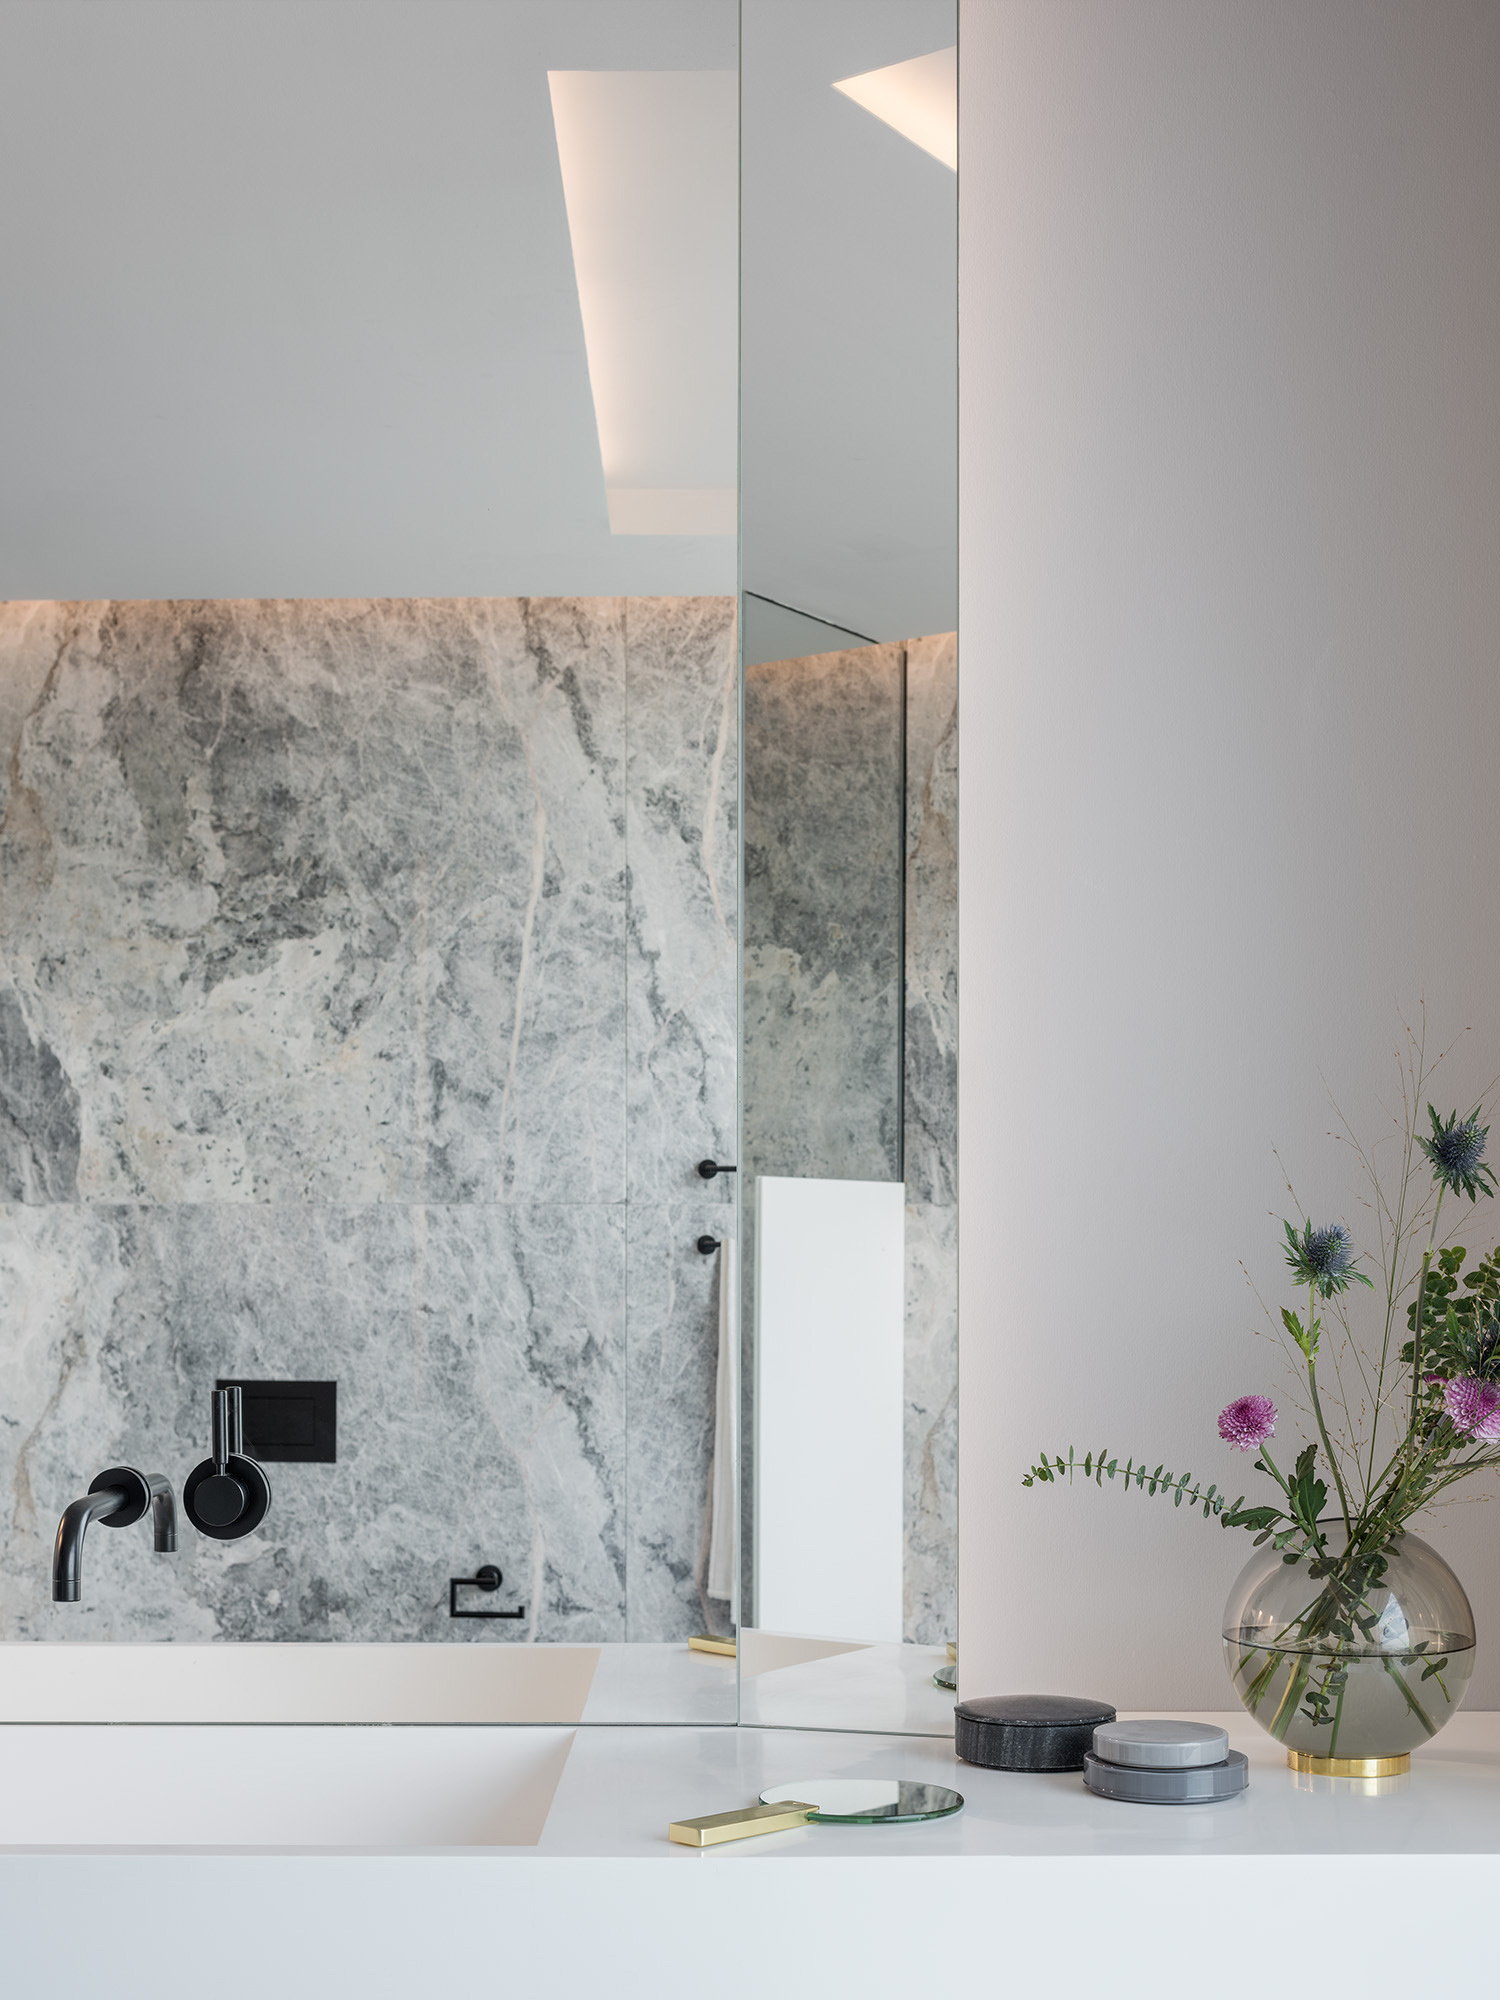 Shades of Grey Apartment Interior Design Shanghai, China – Ippolito Fleitz Group – Bathroom Vanity Detail